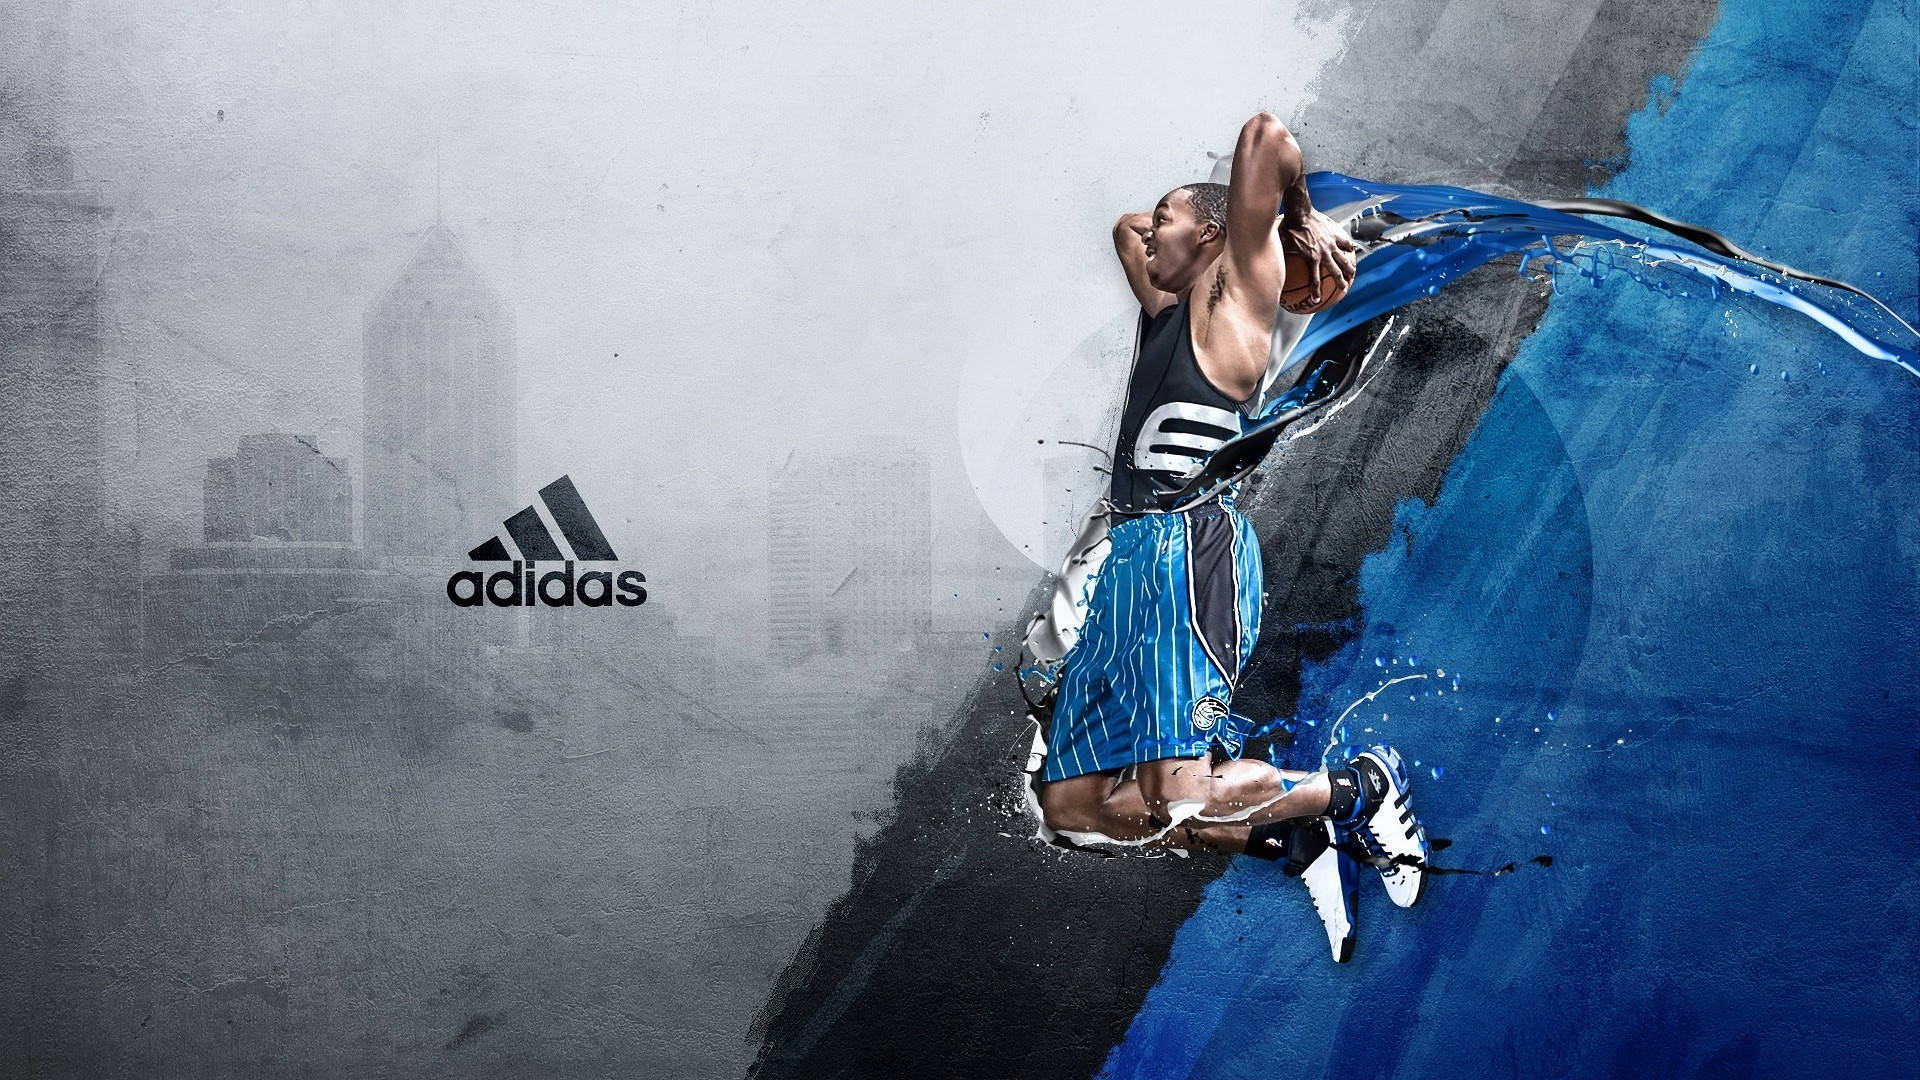 Adidas Shoes Hd Sports Wallpaper